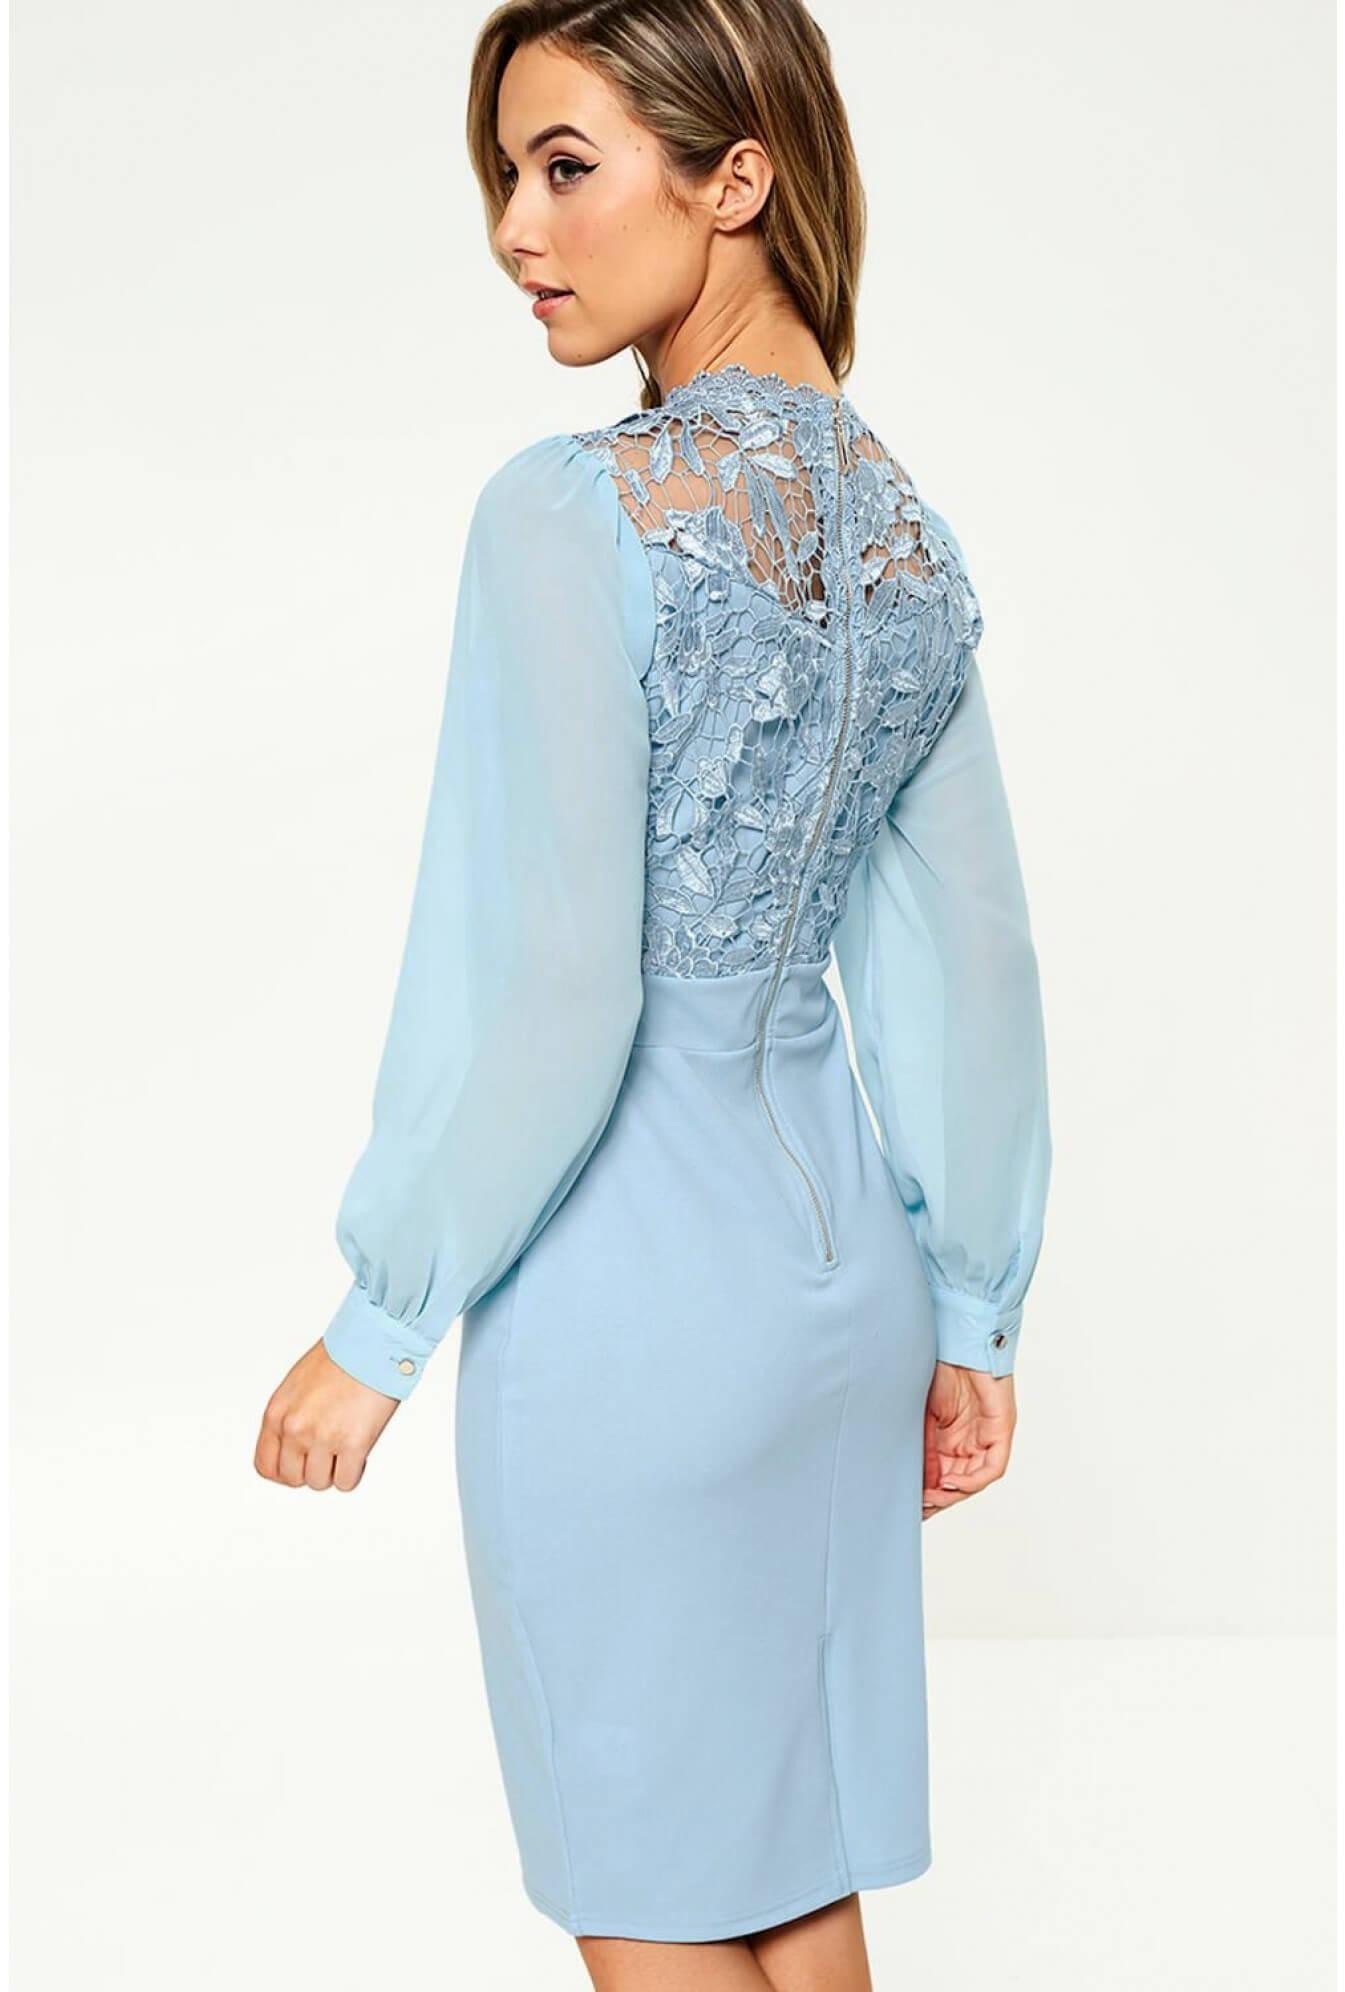 blue occasion dress